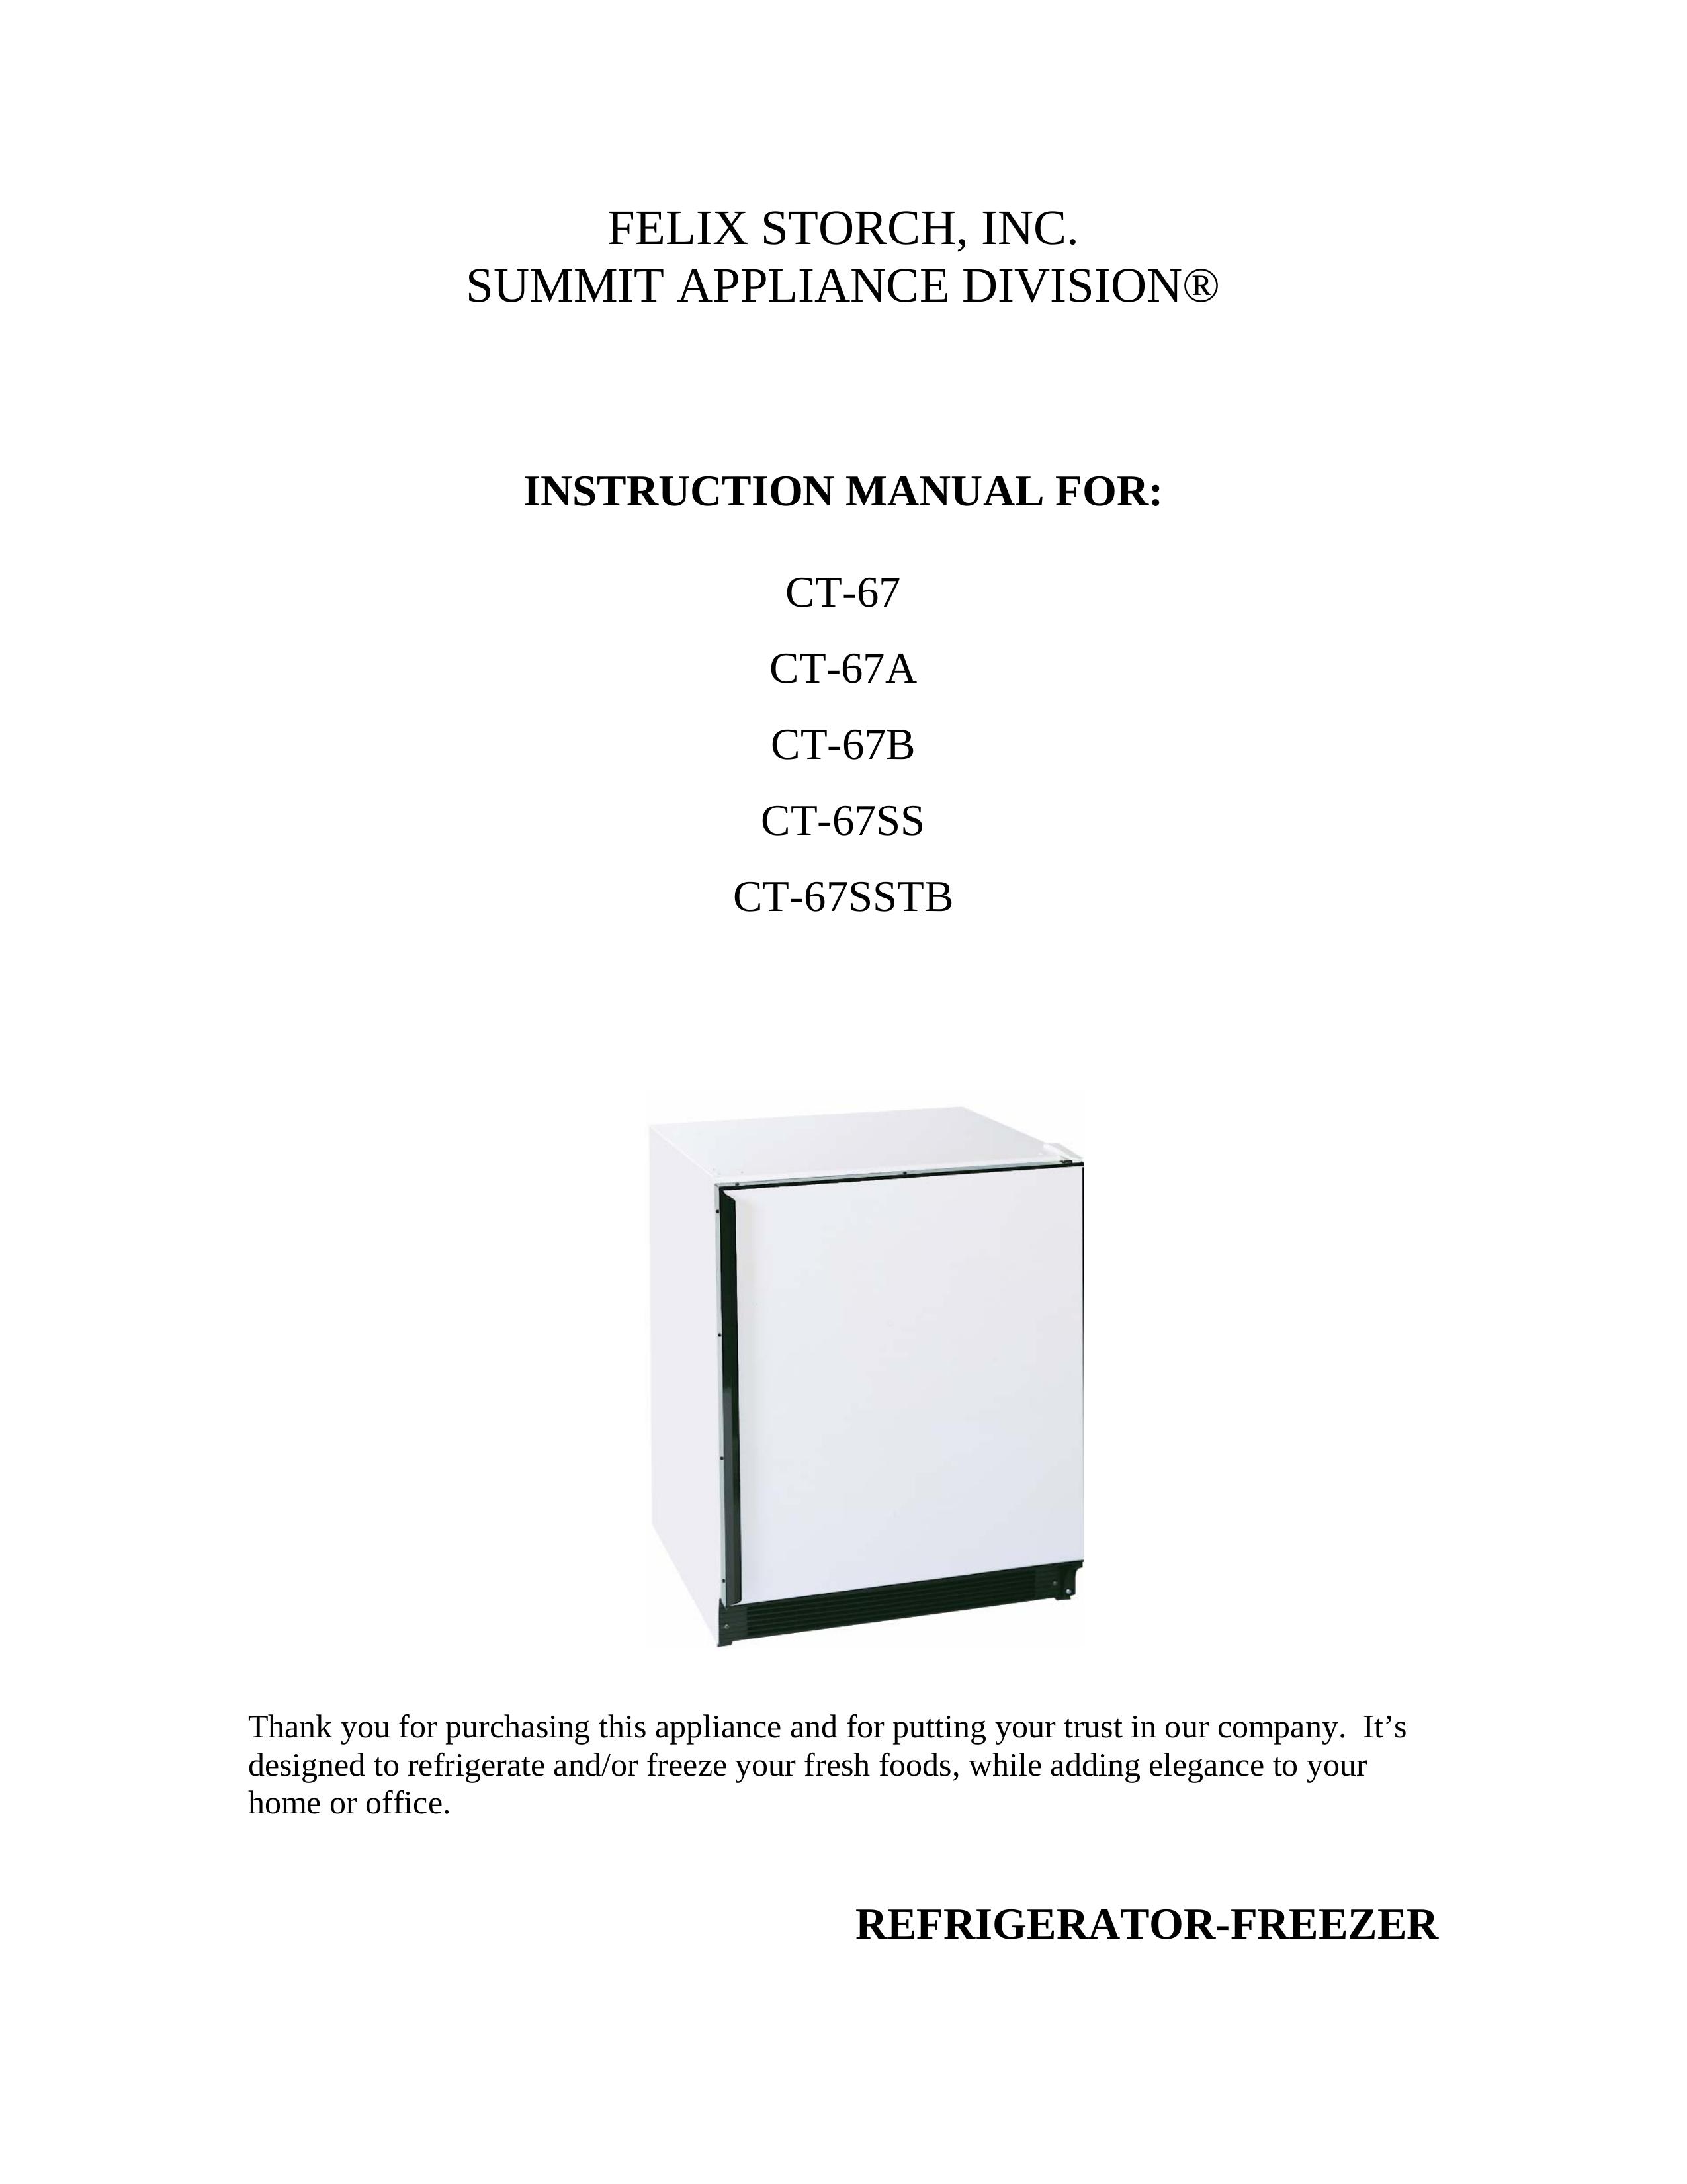 Summit CT-67SS Refrigerator User Manual